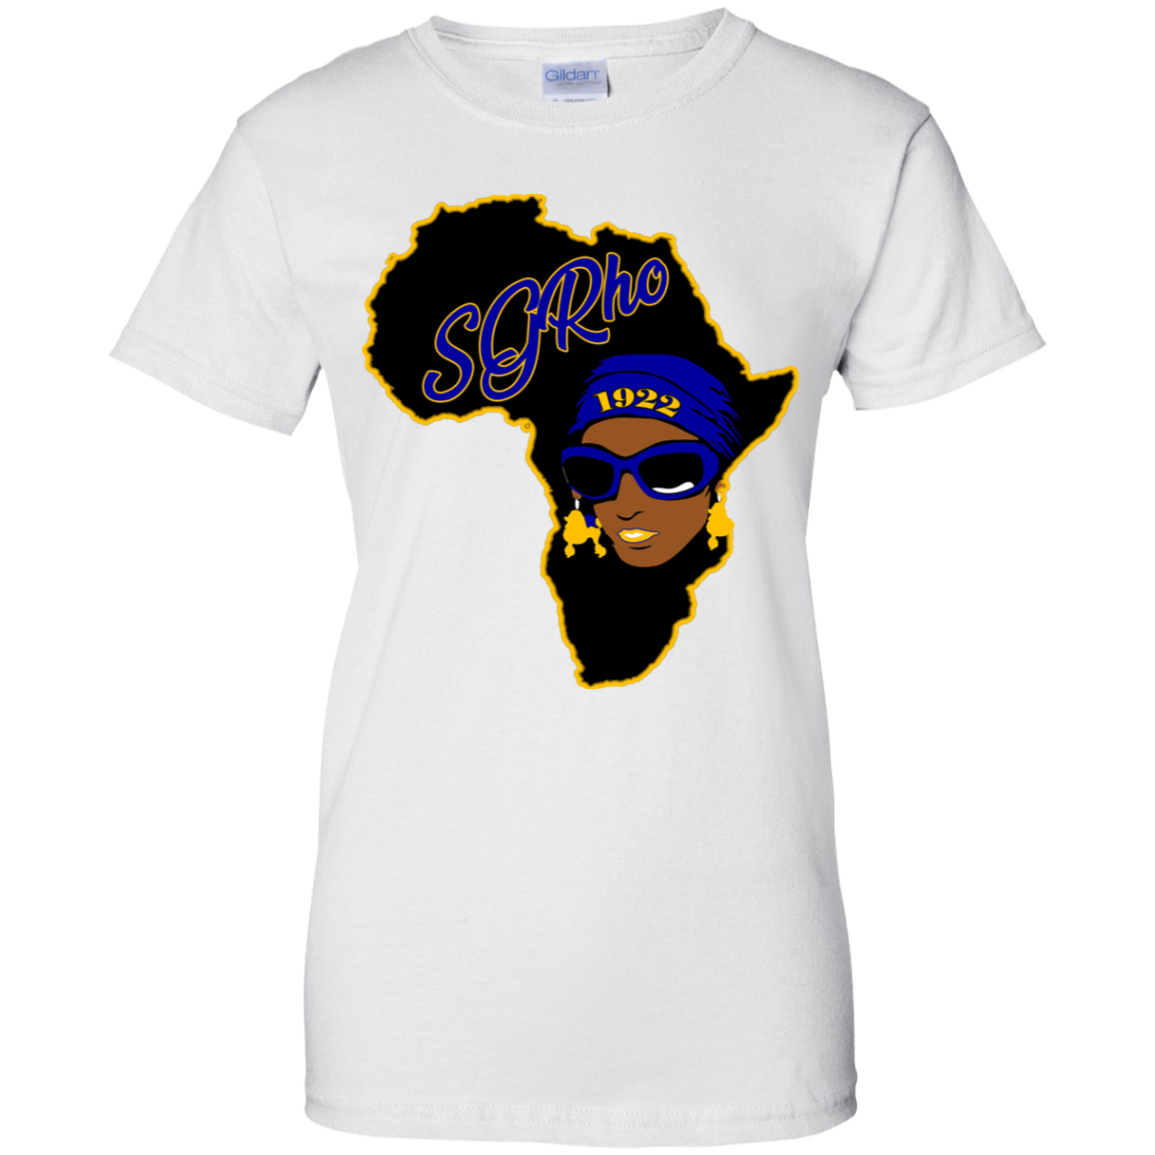 African Sgrho Ladies' 100% Cotton T-Shirt